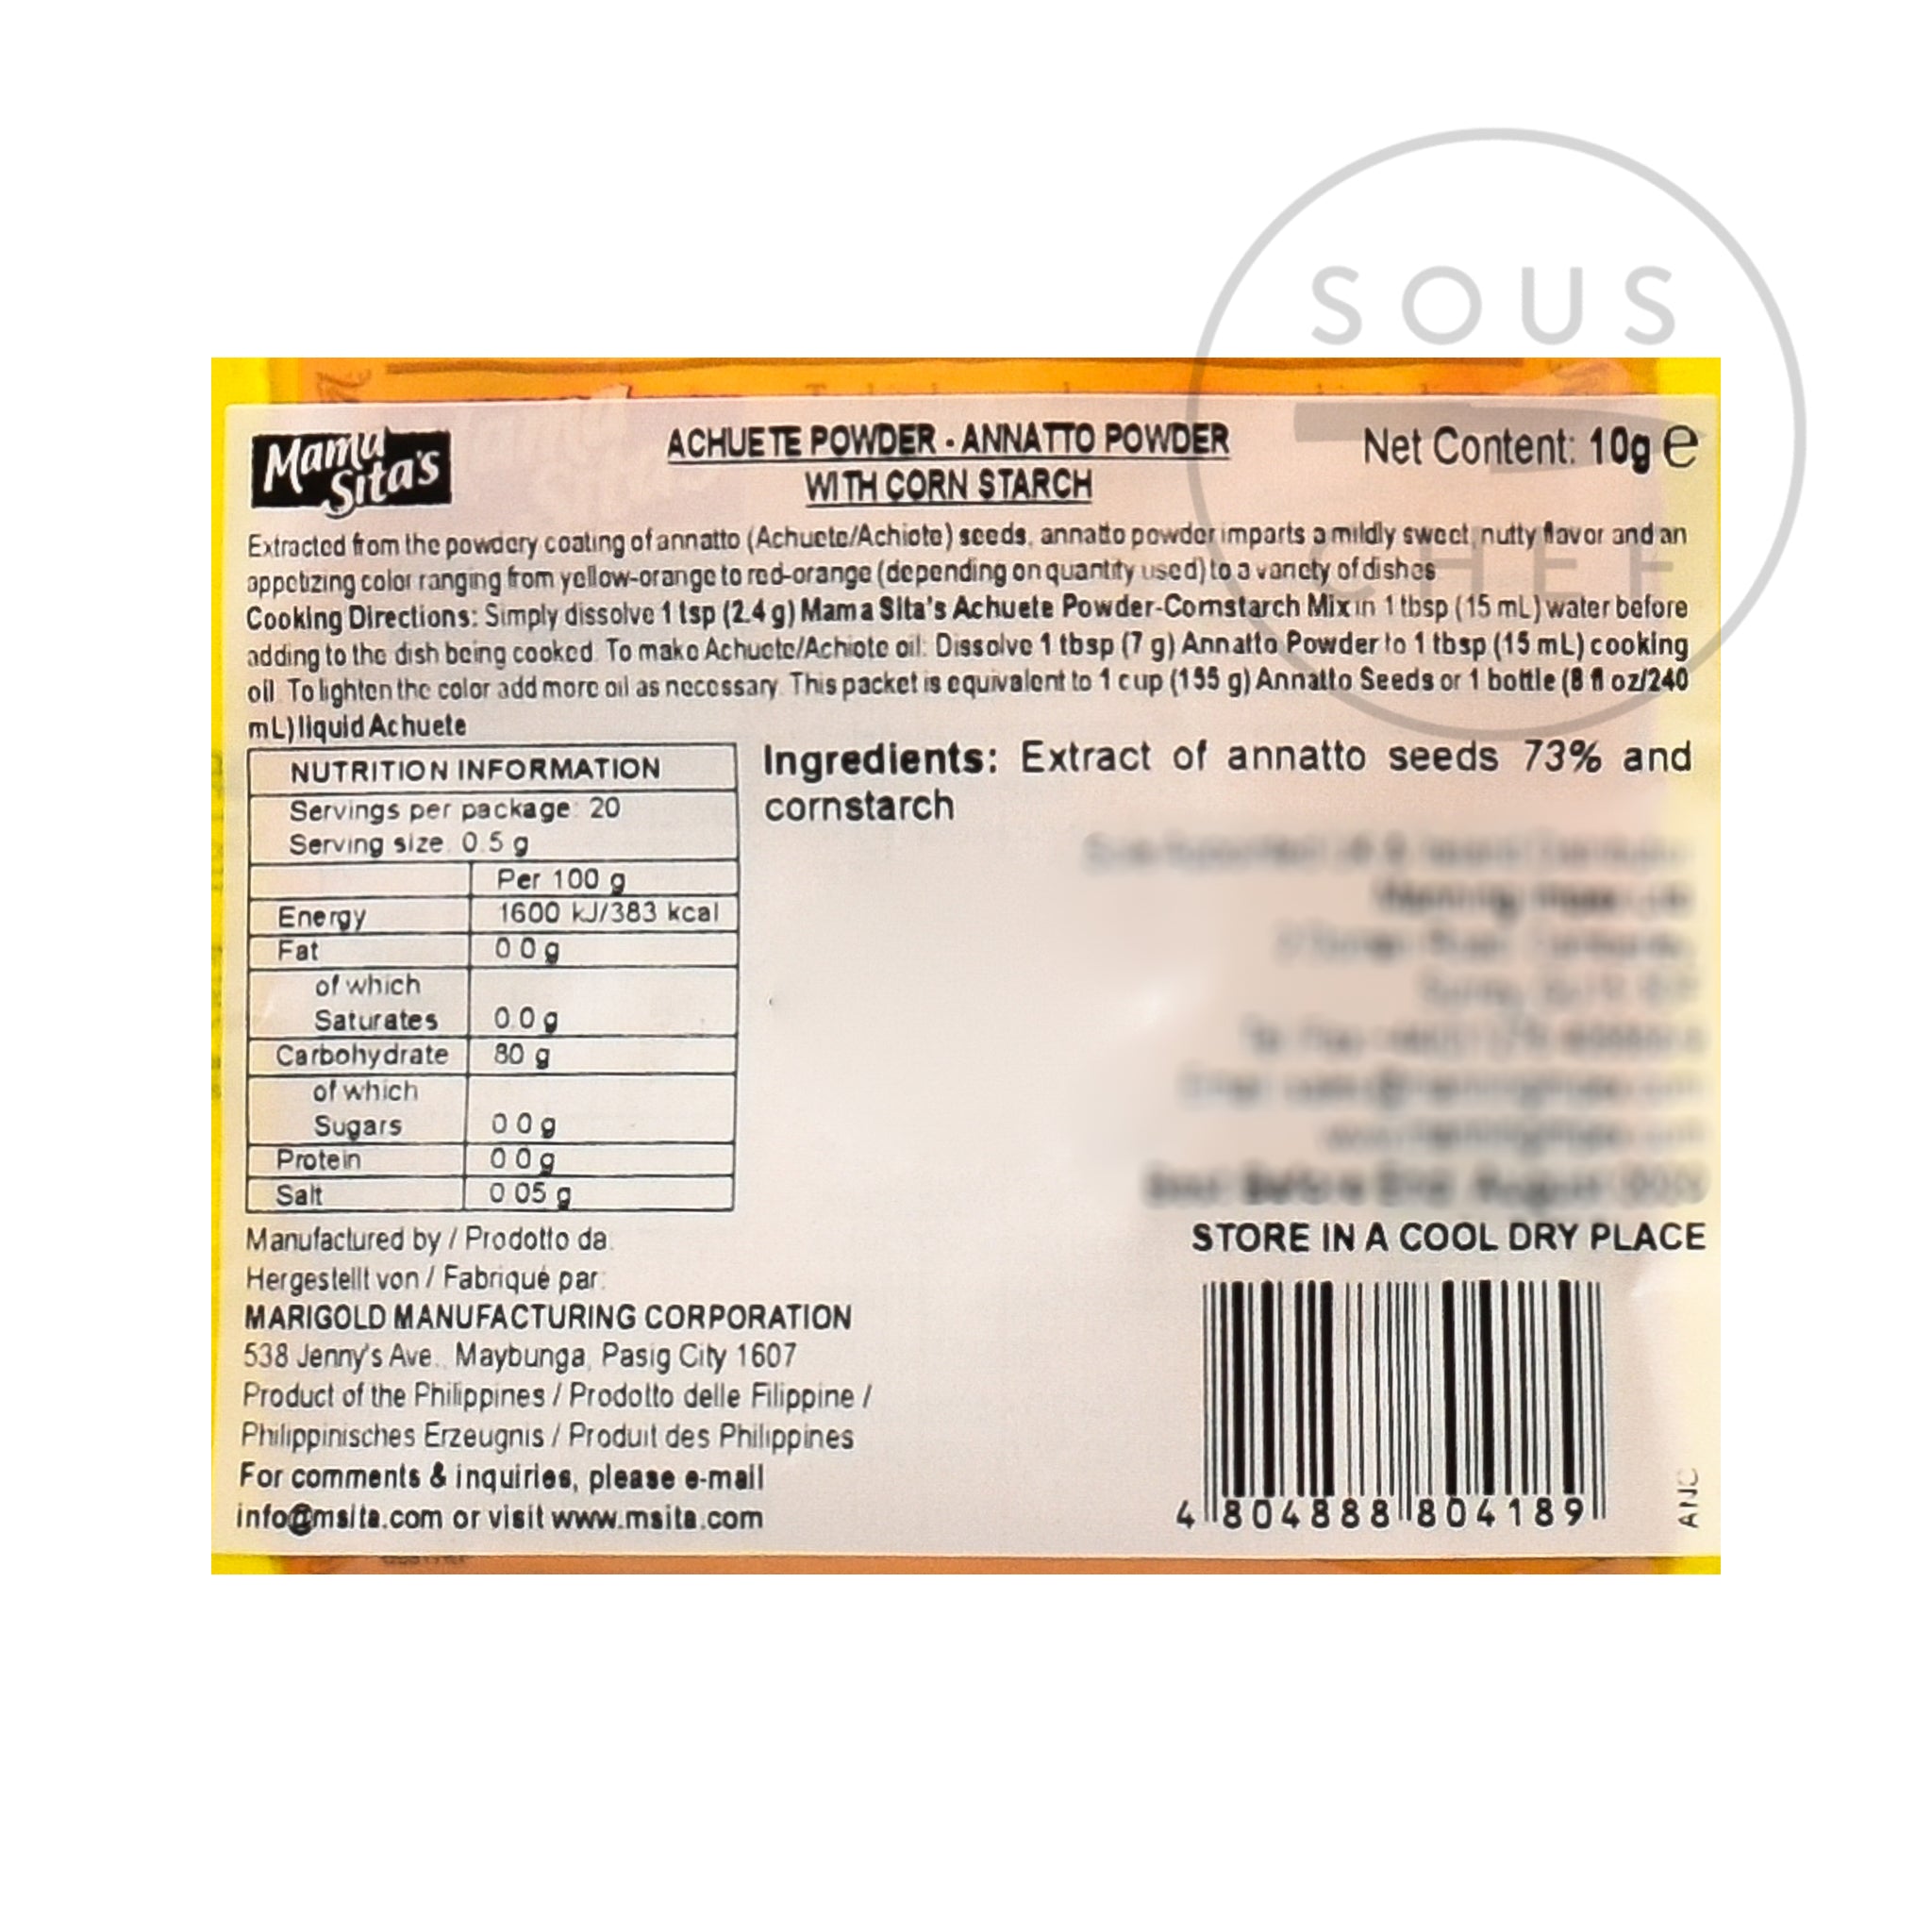 Sous Chef Achiote / Annatto Powder 10g Ingredients Seasonings ingredients nutritional information